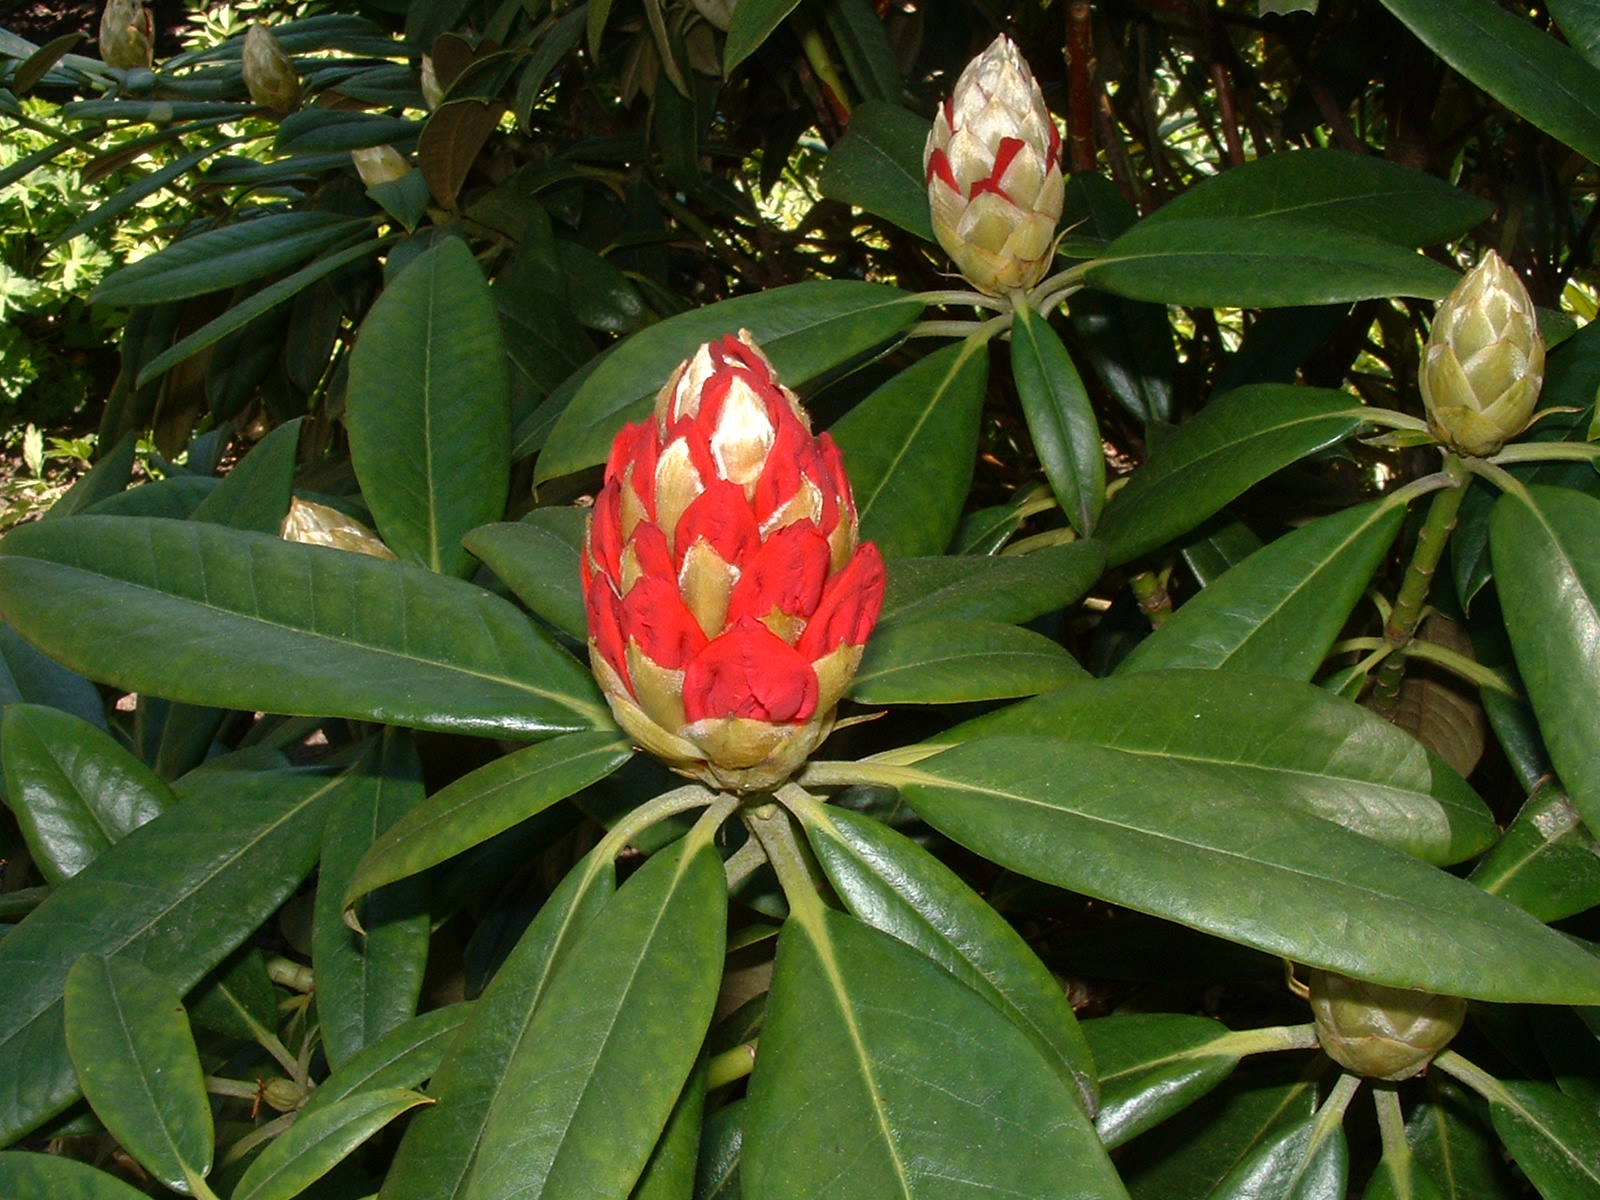 Bruns Pflanzen - Rhododendron-Park Gristede